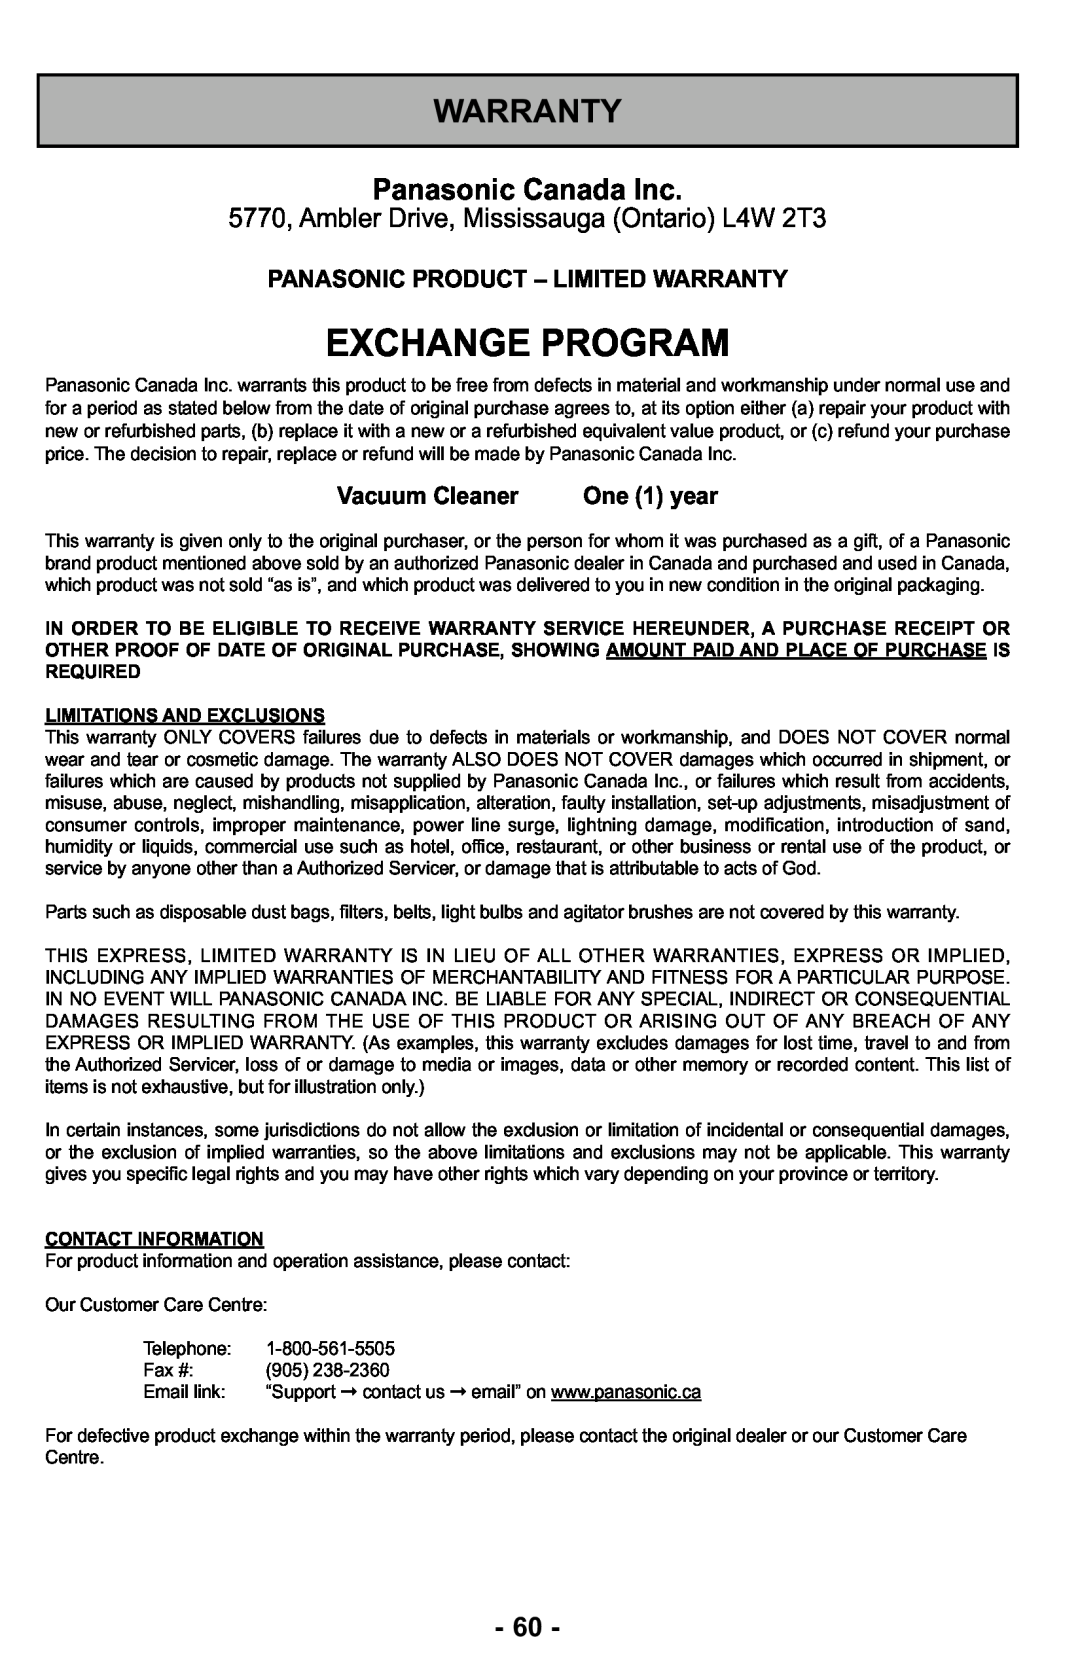 Panasonic MC-UL427 Exchange Program, Warranty, Panasonic Canada Inc, 5770, Ambler Drive, Mississauga Ontario L4W 2T3 